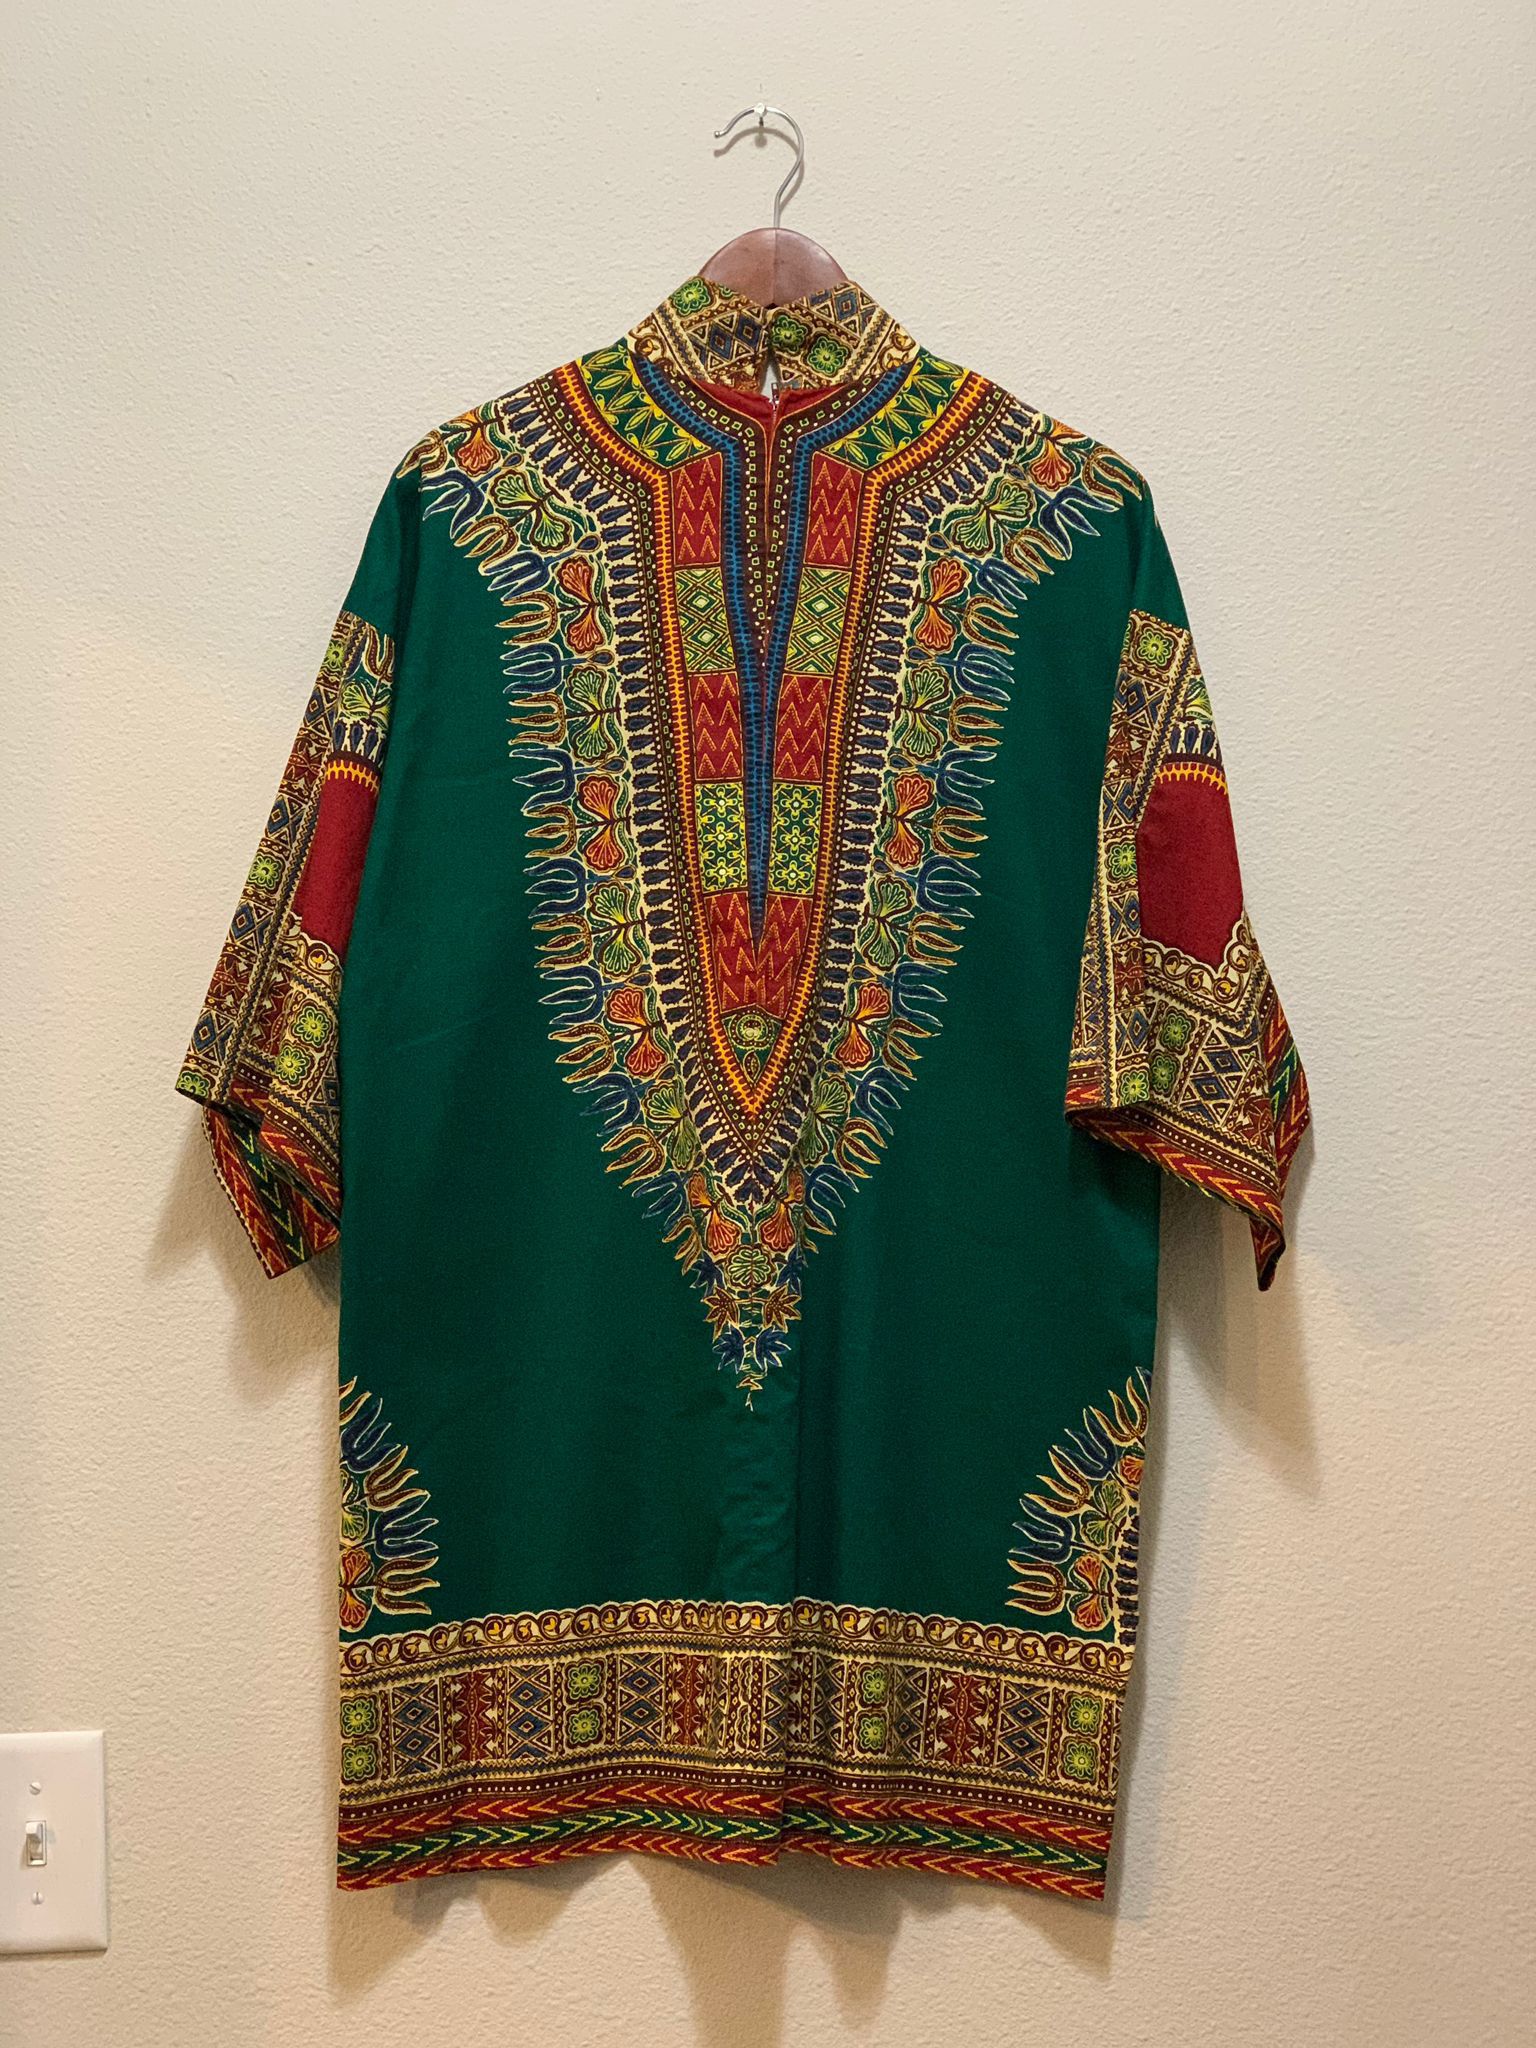 African Men Women Dashiki Cotton T Shirt Blouse Traditional Hippie Unisex Top Tribal Festival Clothing